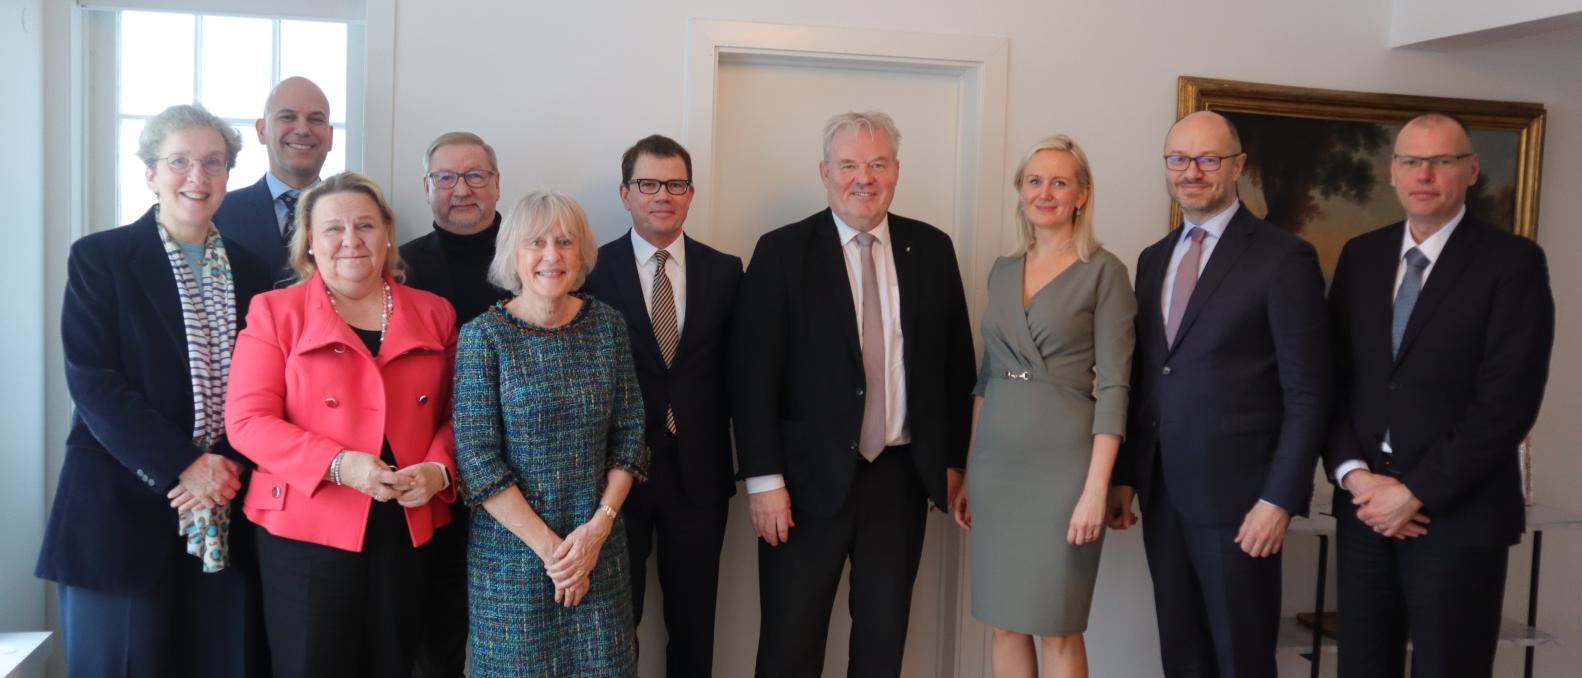 Ambassadors of EU Member States with Minister of Infrastructure, Sigurður Ingi Jóhansson